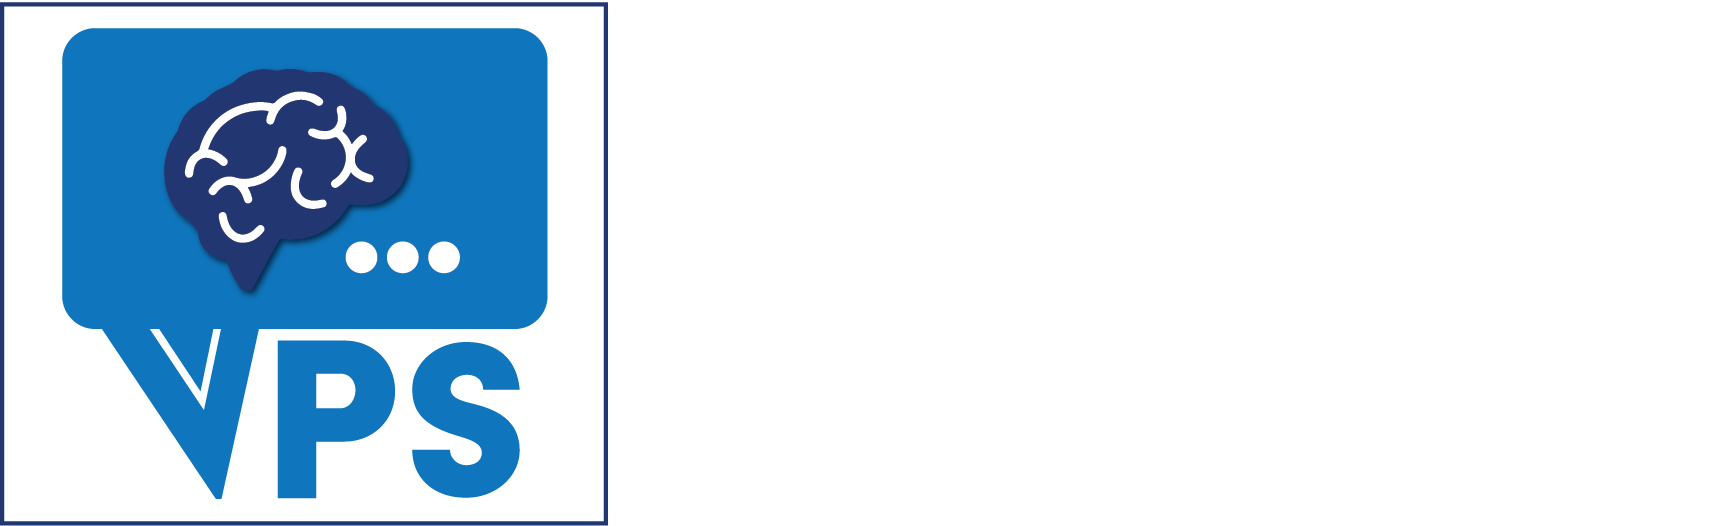 virtual psychiatric services logo